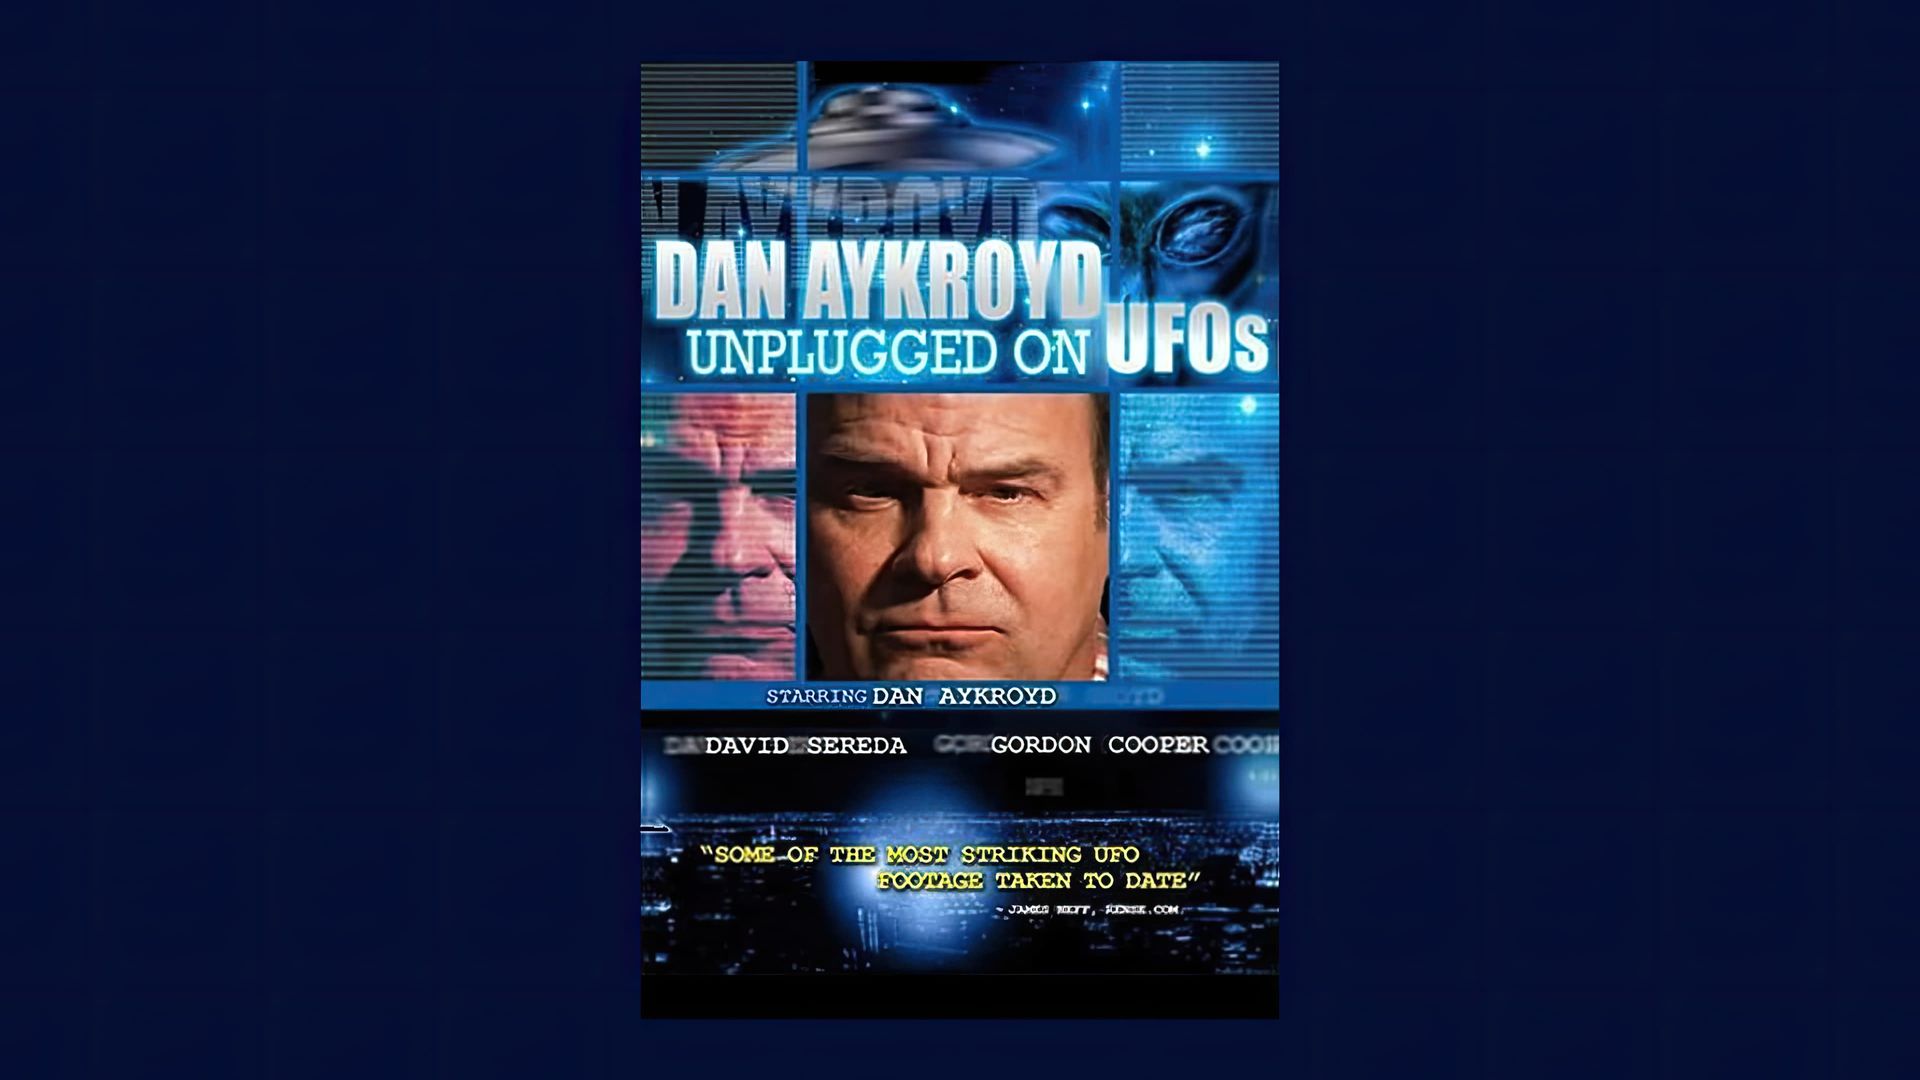 Dan Aykroyd Unplugged on UFOs background